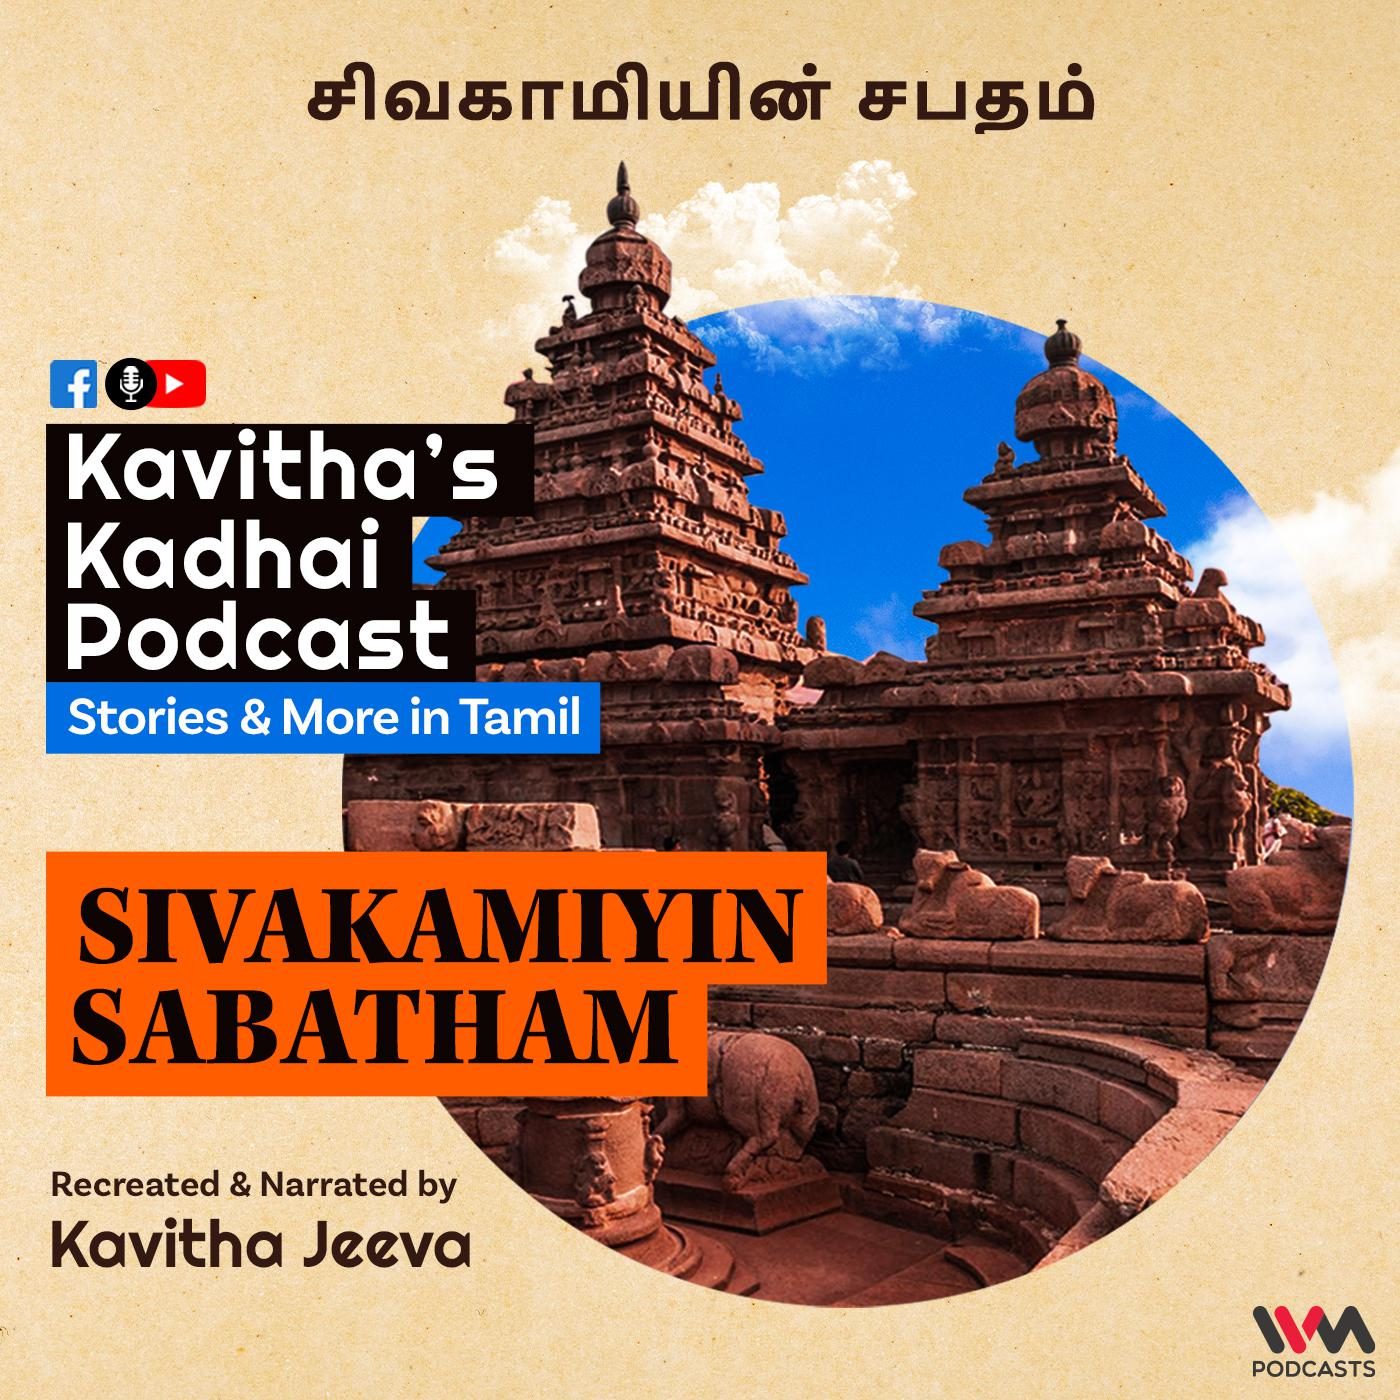 KadhaiPodcast's Sivakamiyin Sabatham with Kavitha Jeeva - Episode #124